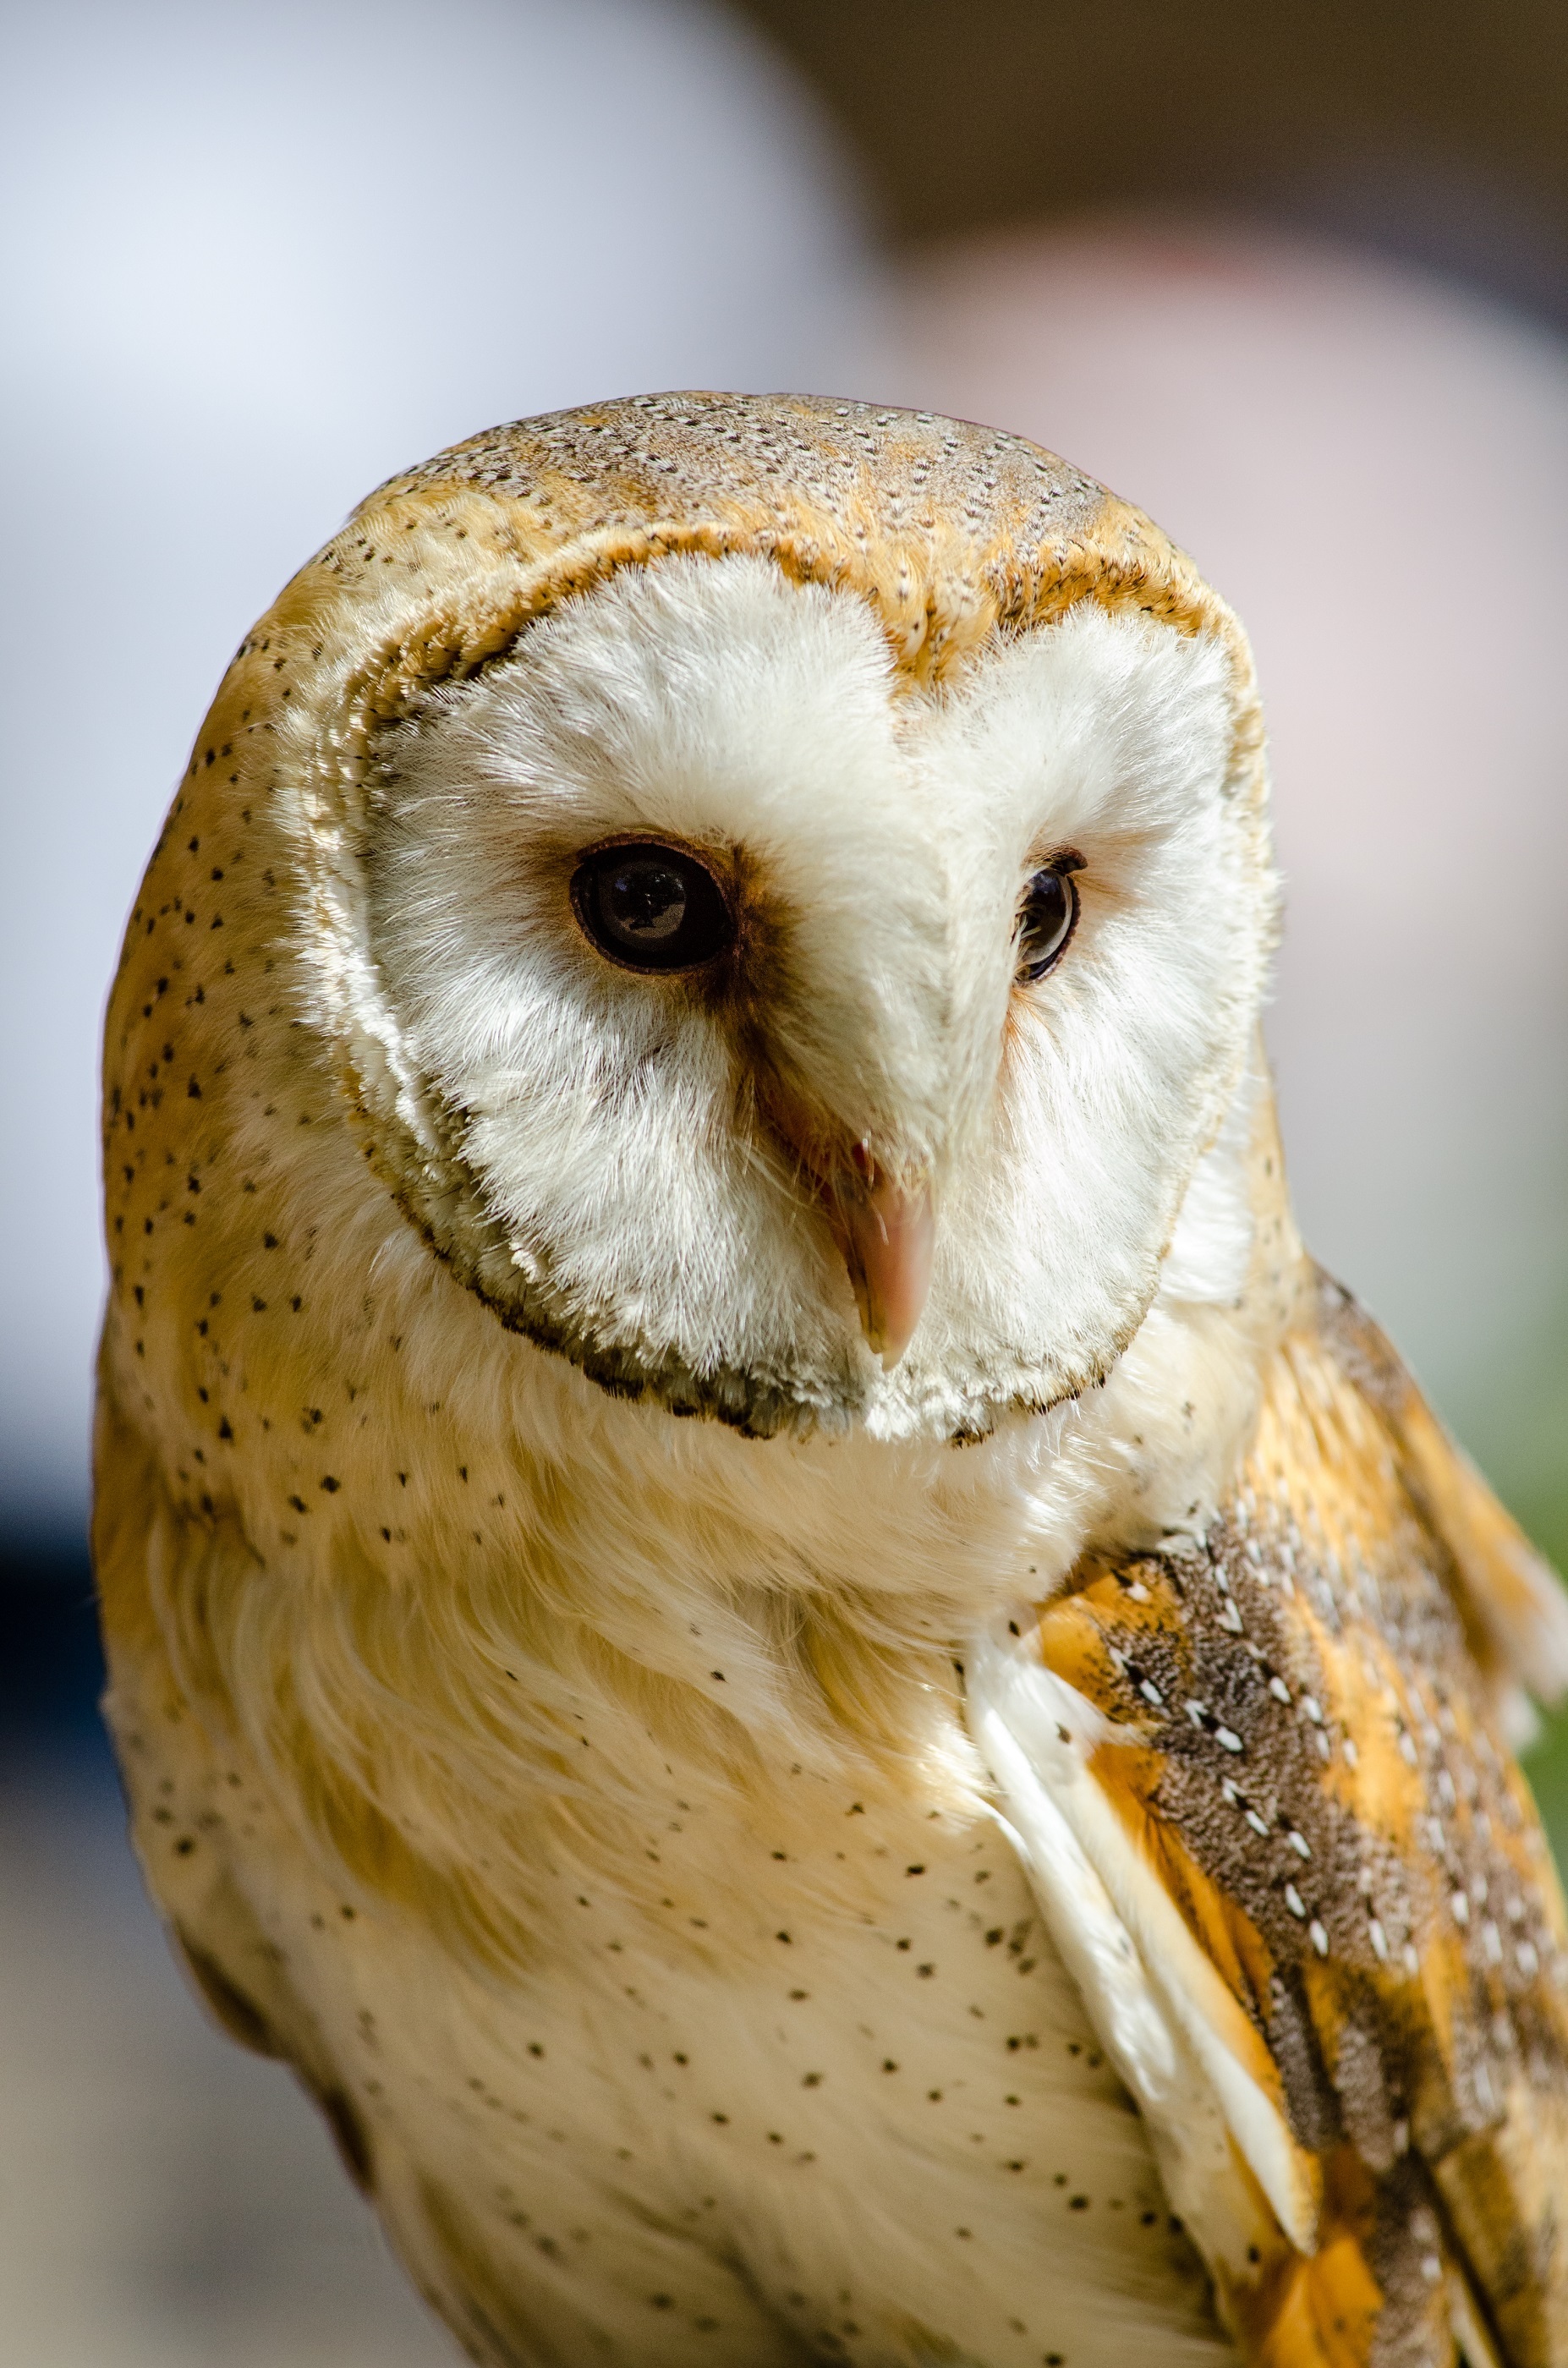 Common barn owl photo